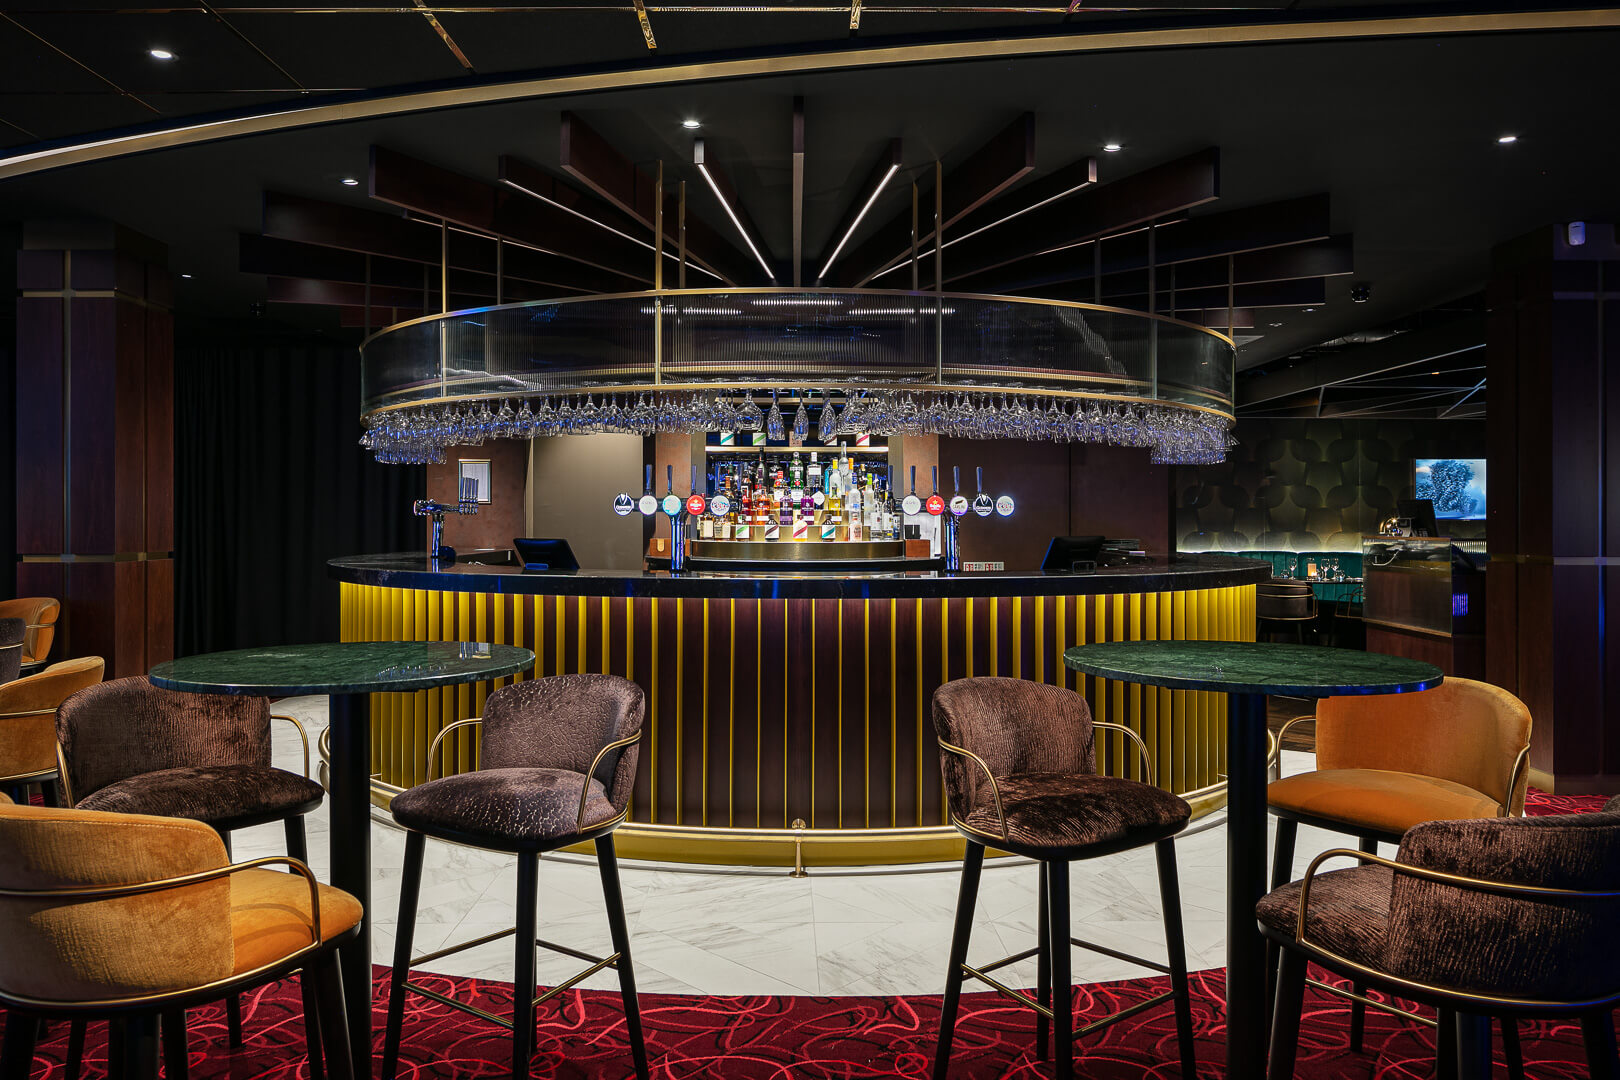 The spectacular circular bar at Napoleons Casino & Restaurant, Manchester